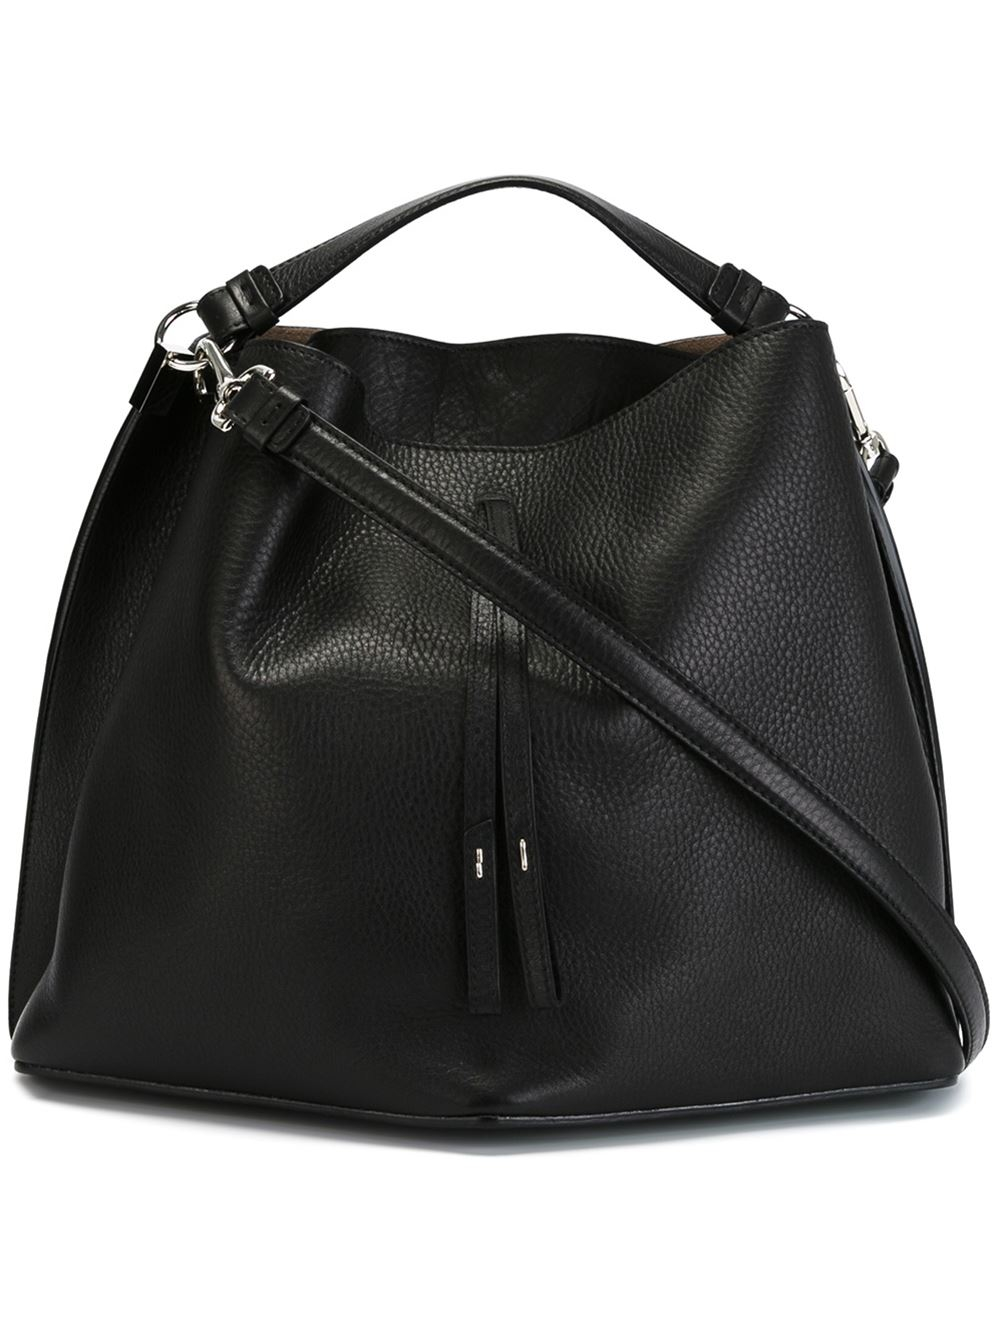 Maison margiela Medium Hobo Shoulder Bag in Black | Lyst